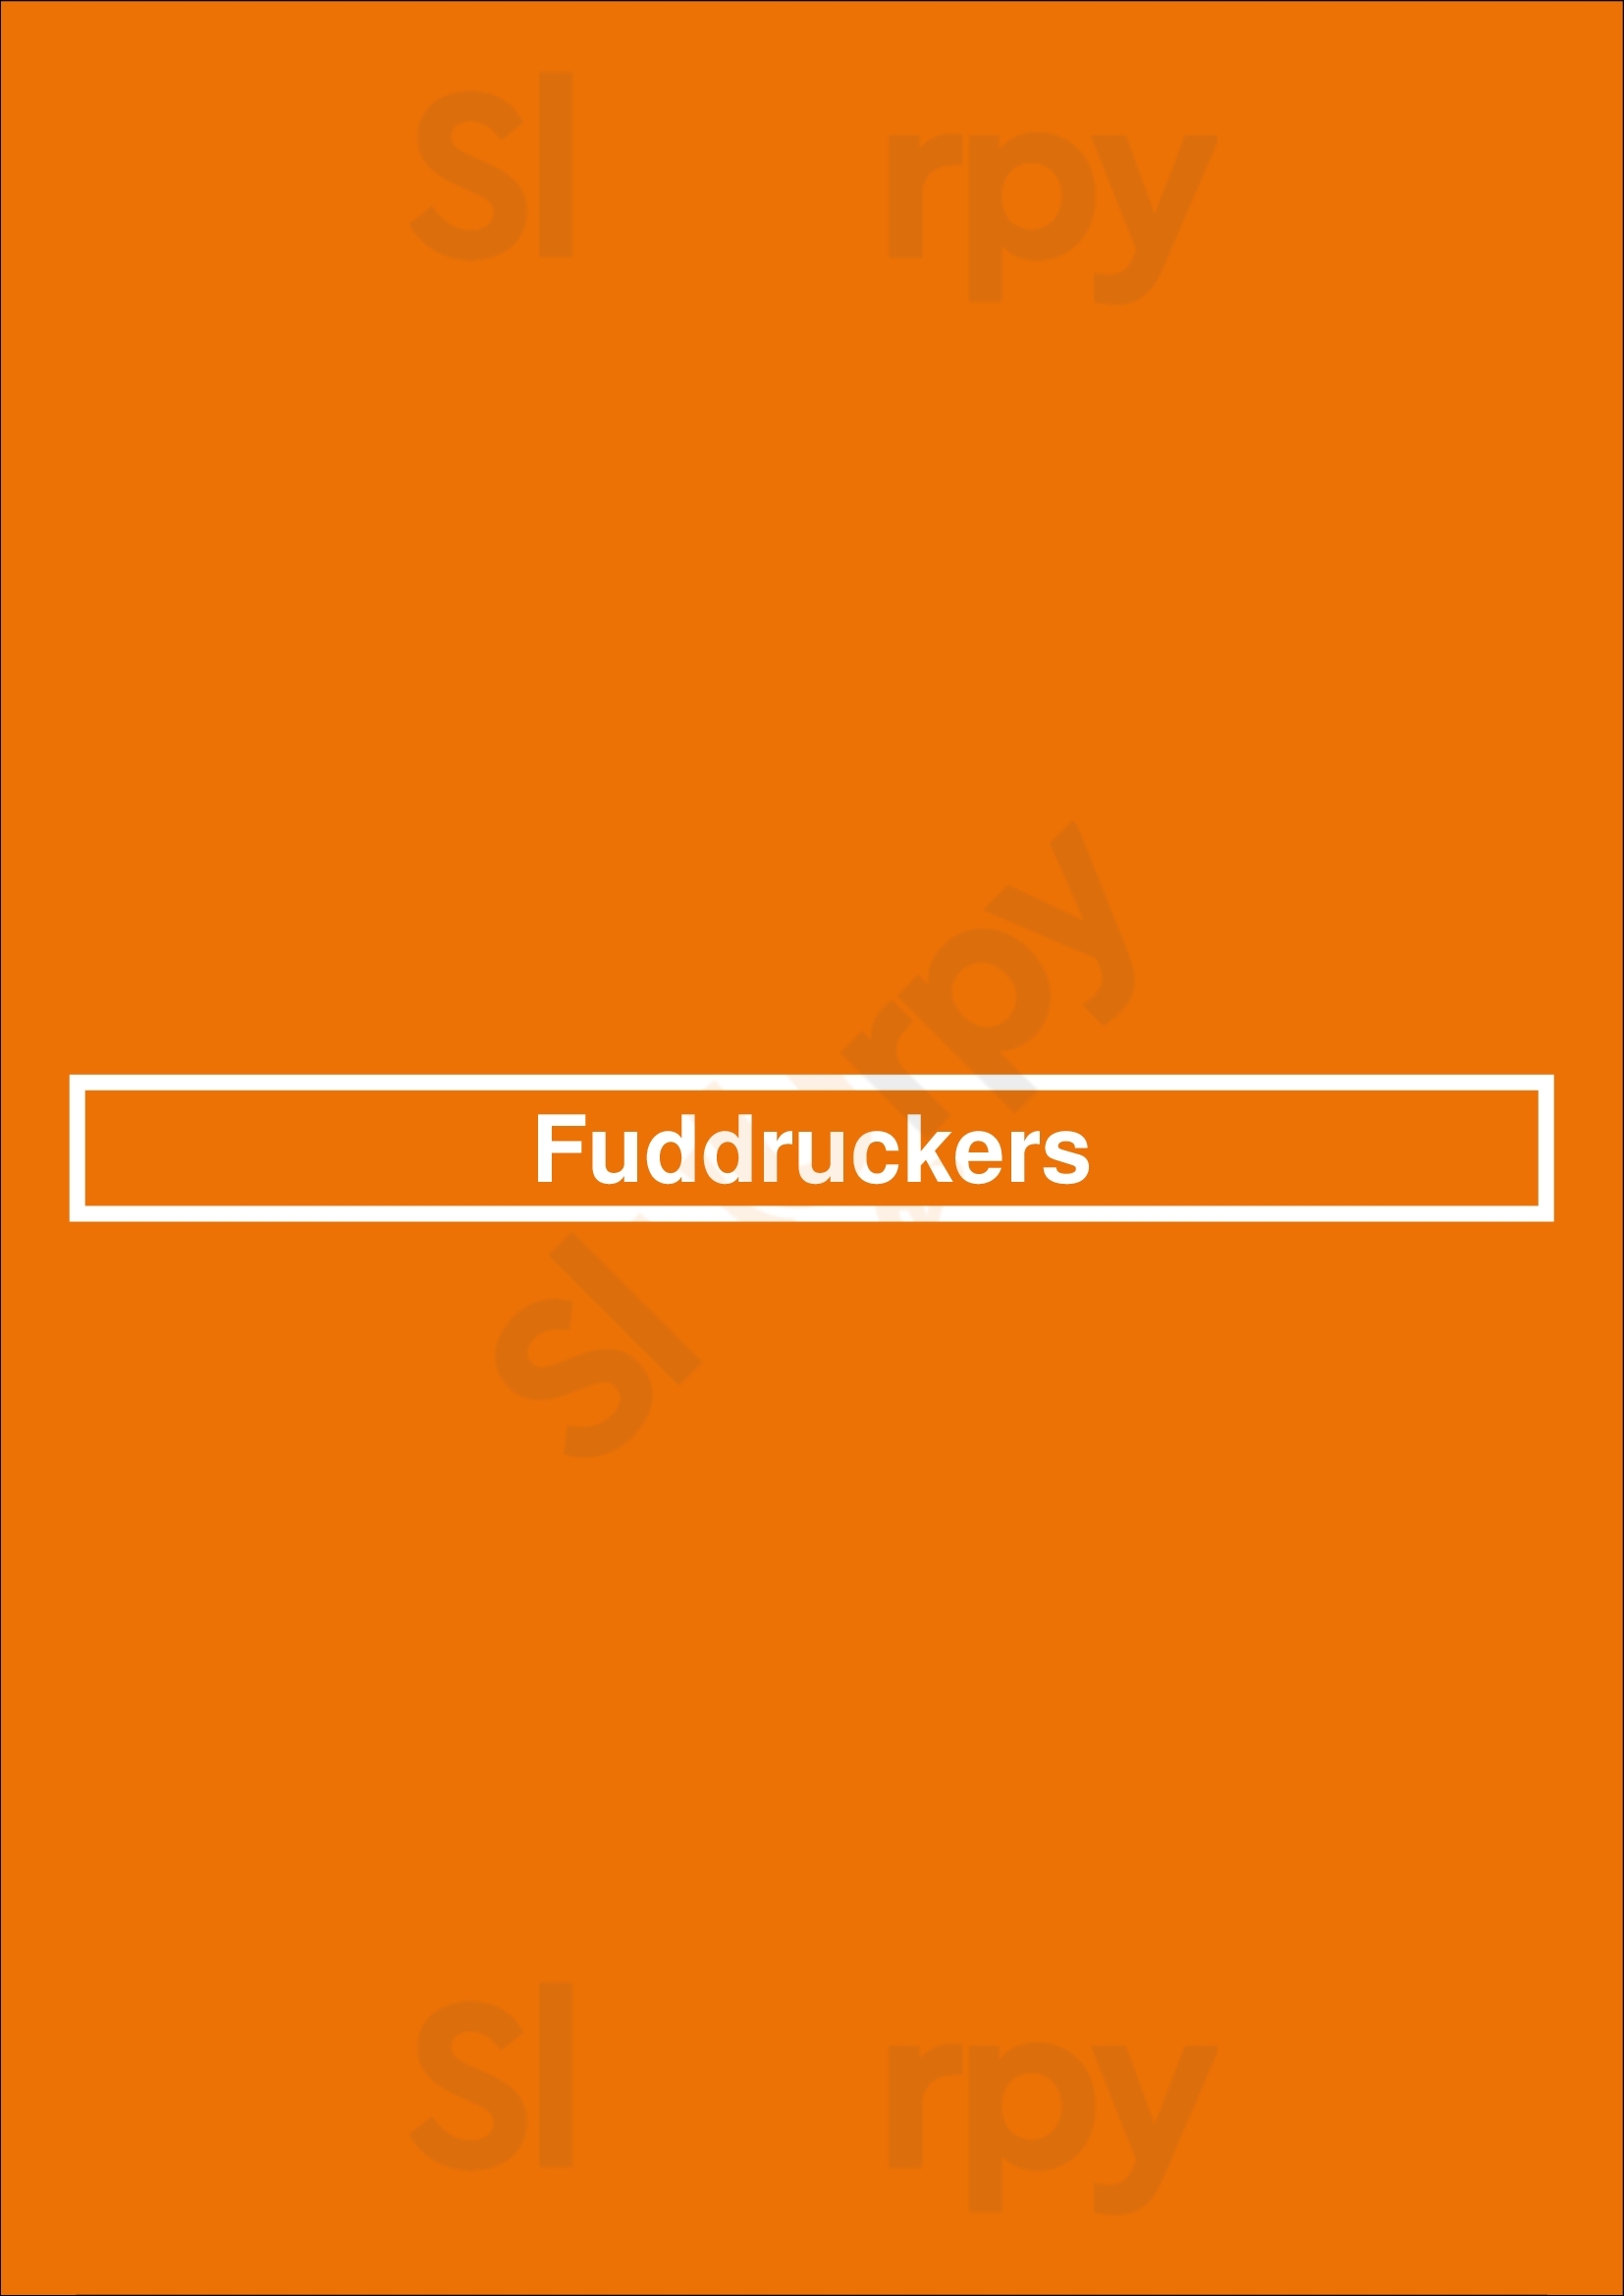 Fuddruckers Phoenix Menu - 1